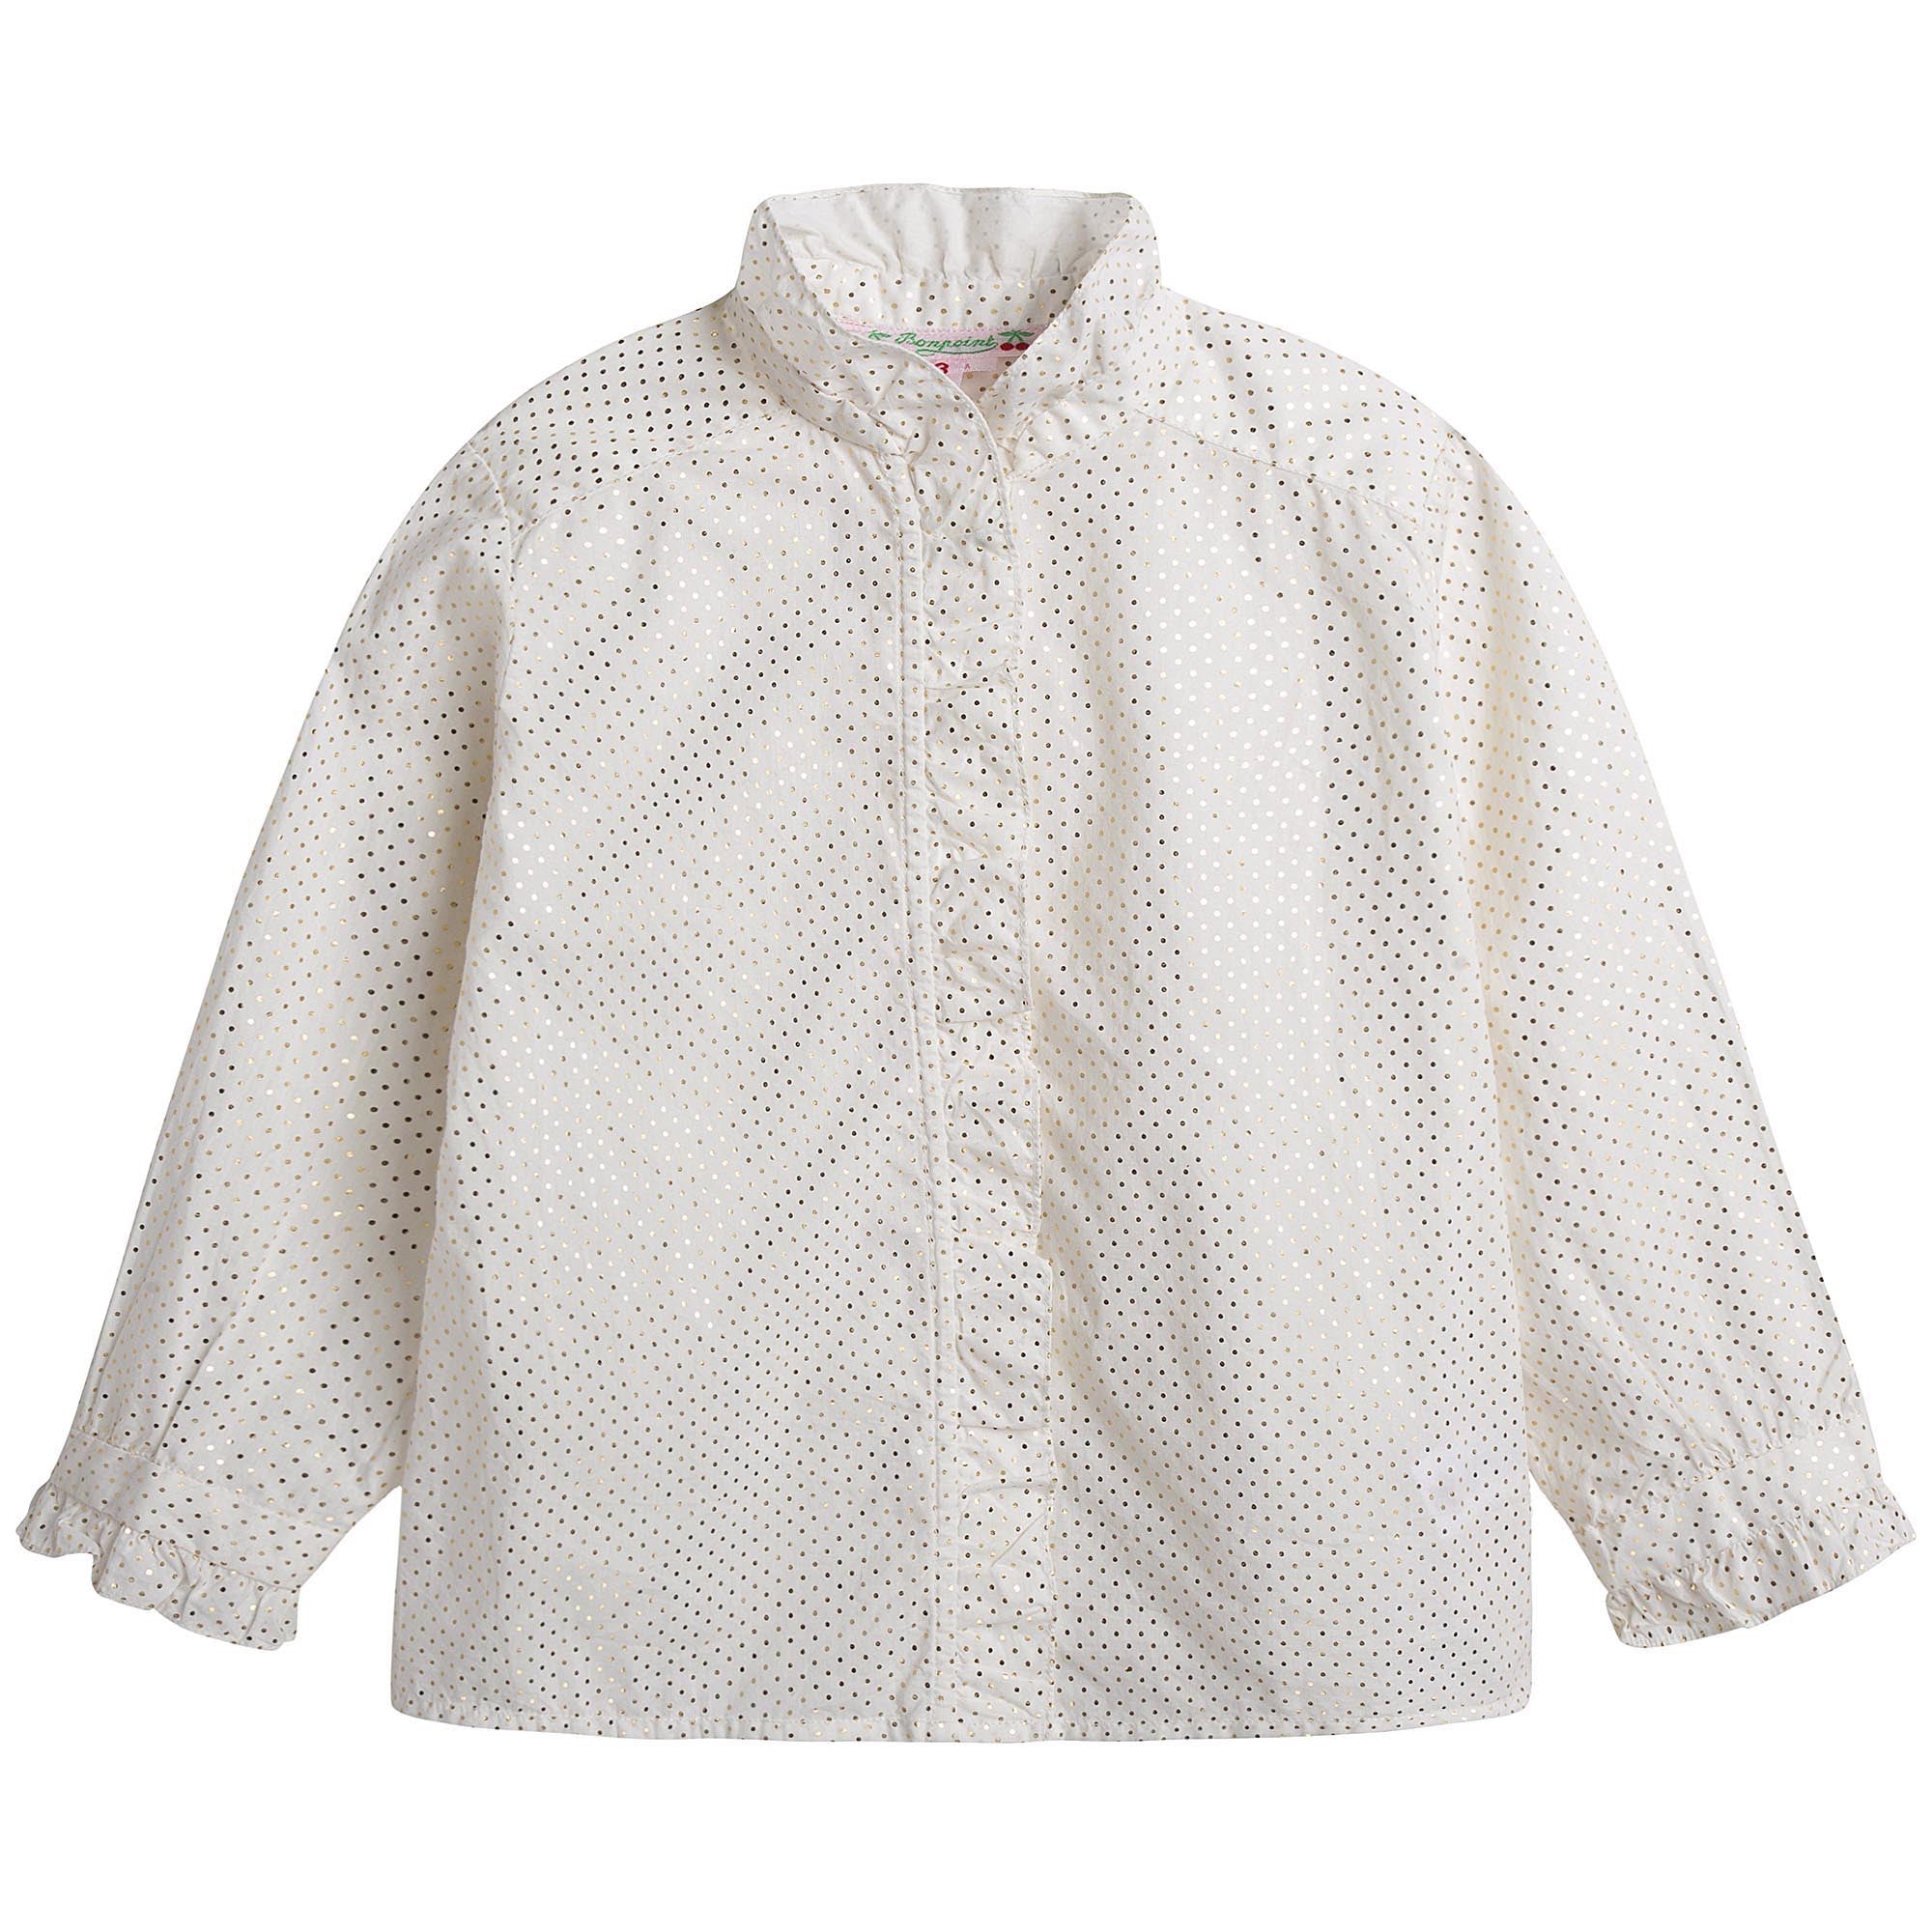 Girls White With Gold Point Shirt - CÉMAROSE | Children's Fashion Store - 1